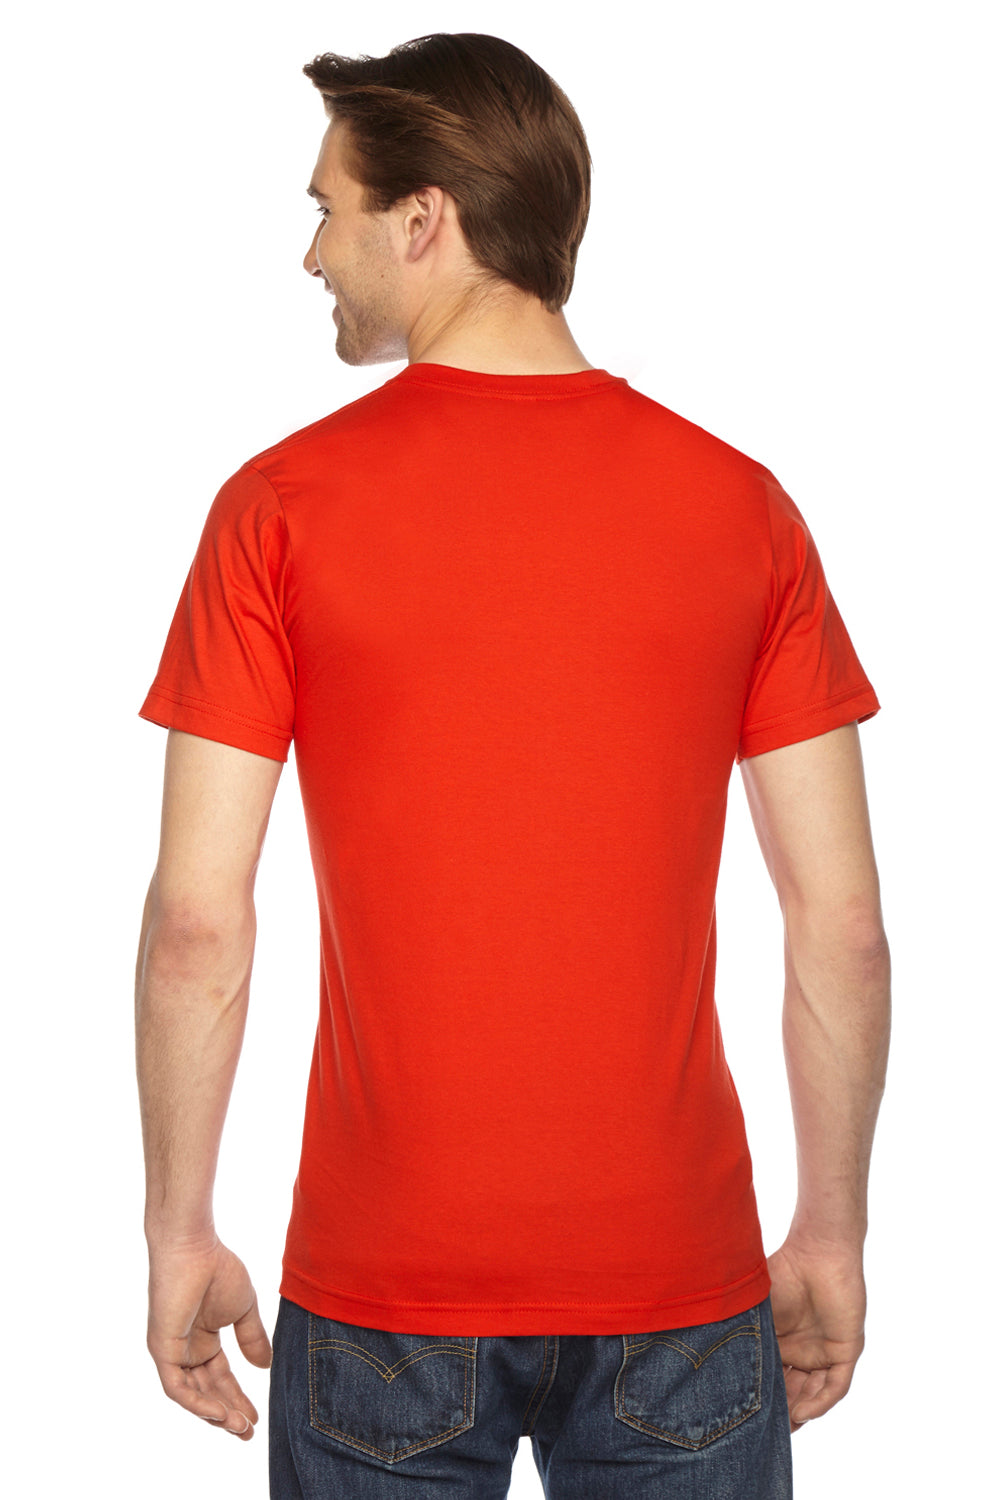 American Apparel 2001W Mens Fine Jersey Short Sleeve Crewneck T-Shirt Orange Back